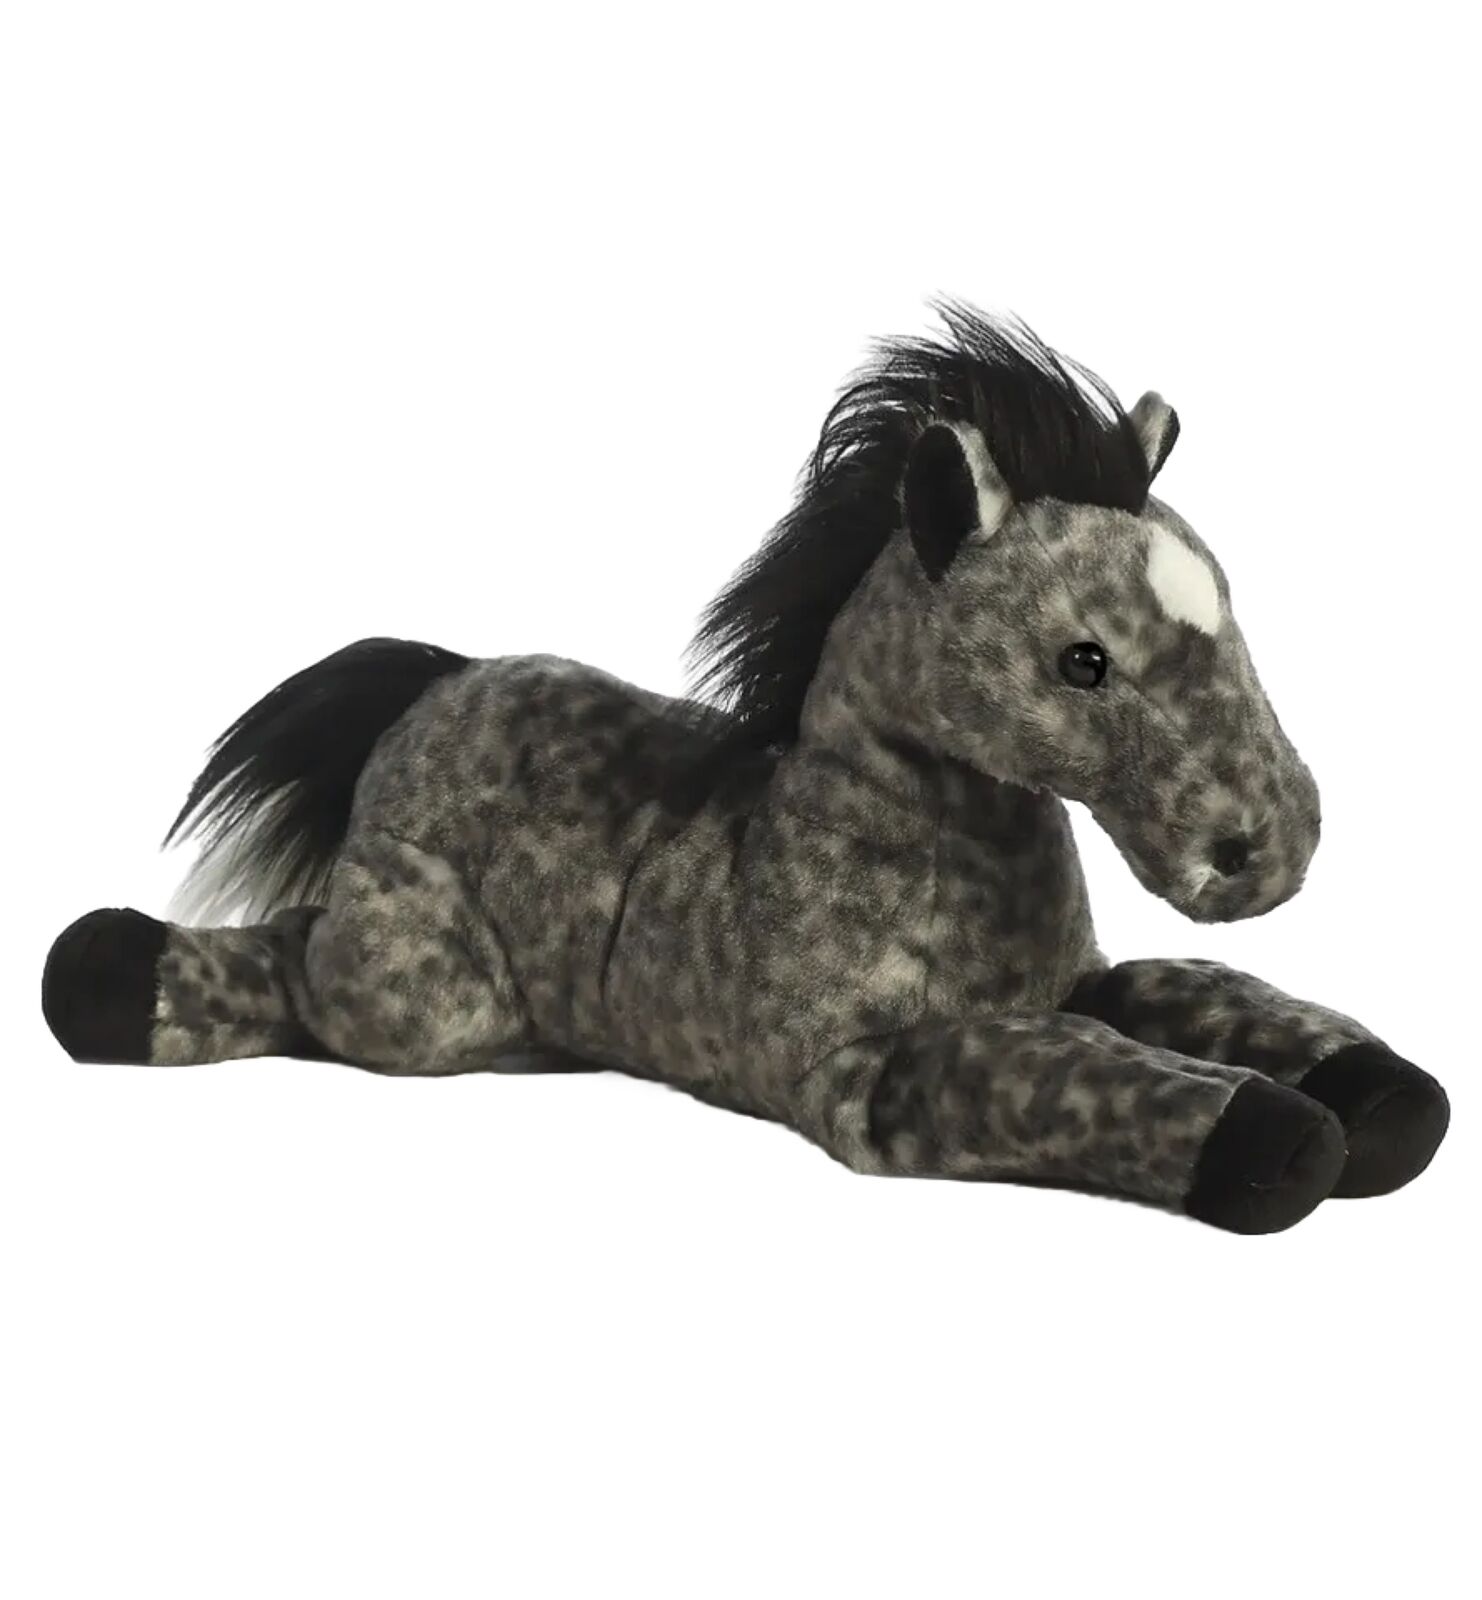 Aurora Plush Stuffed Horse Black Gray Appaloosa Spotted Pony Collectible